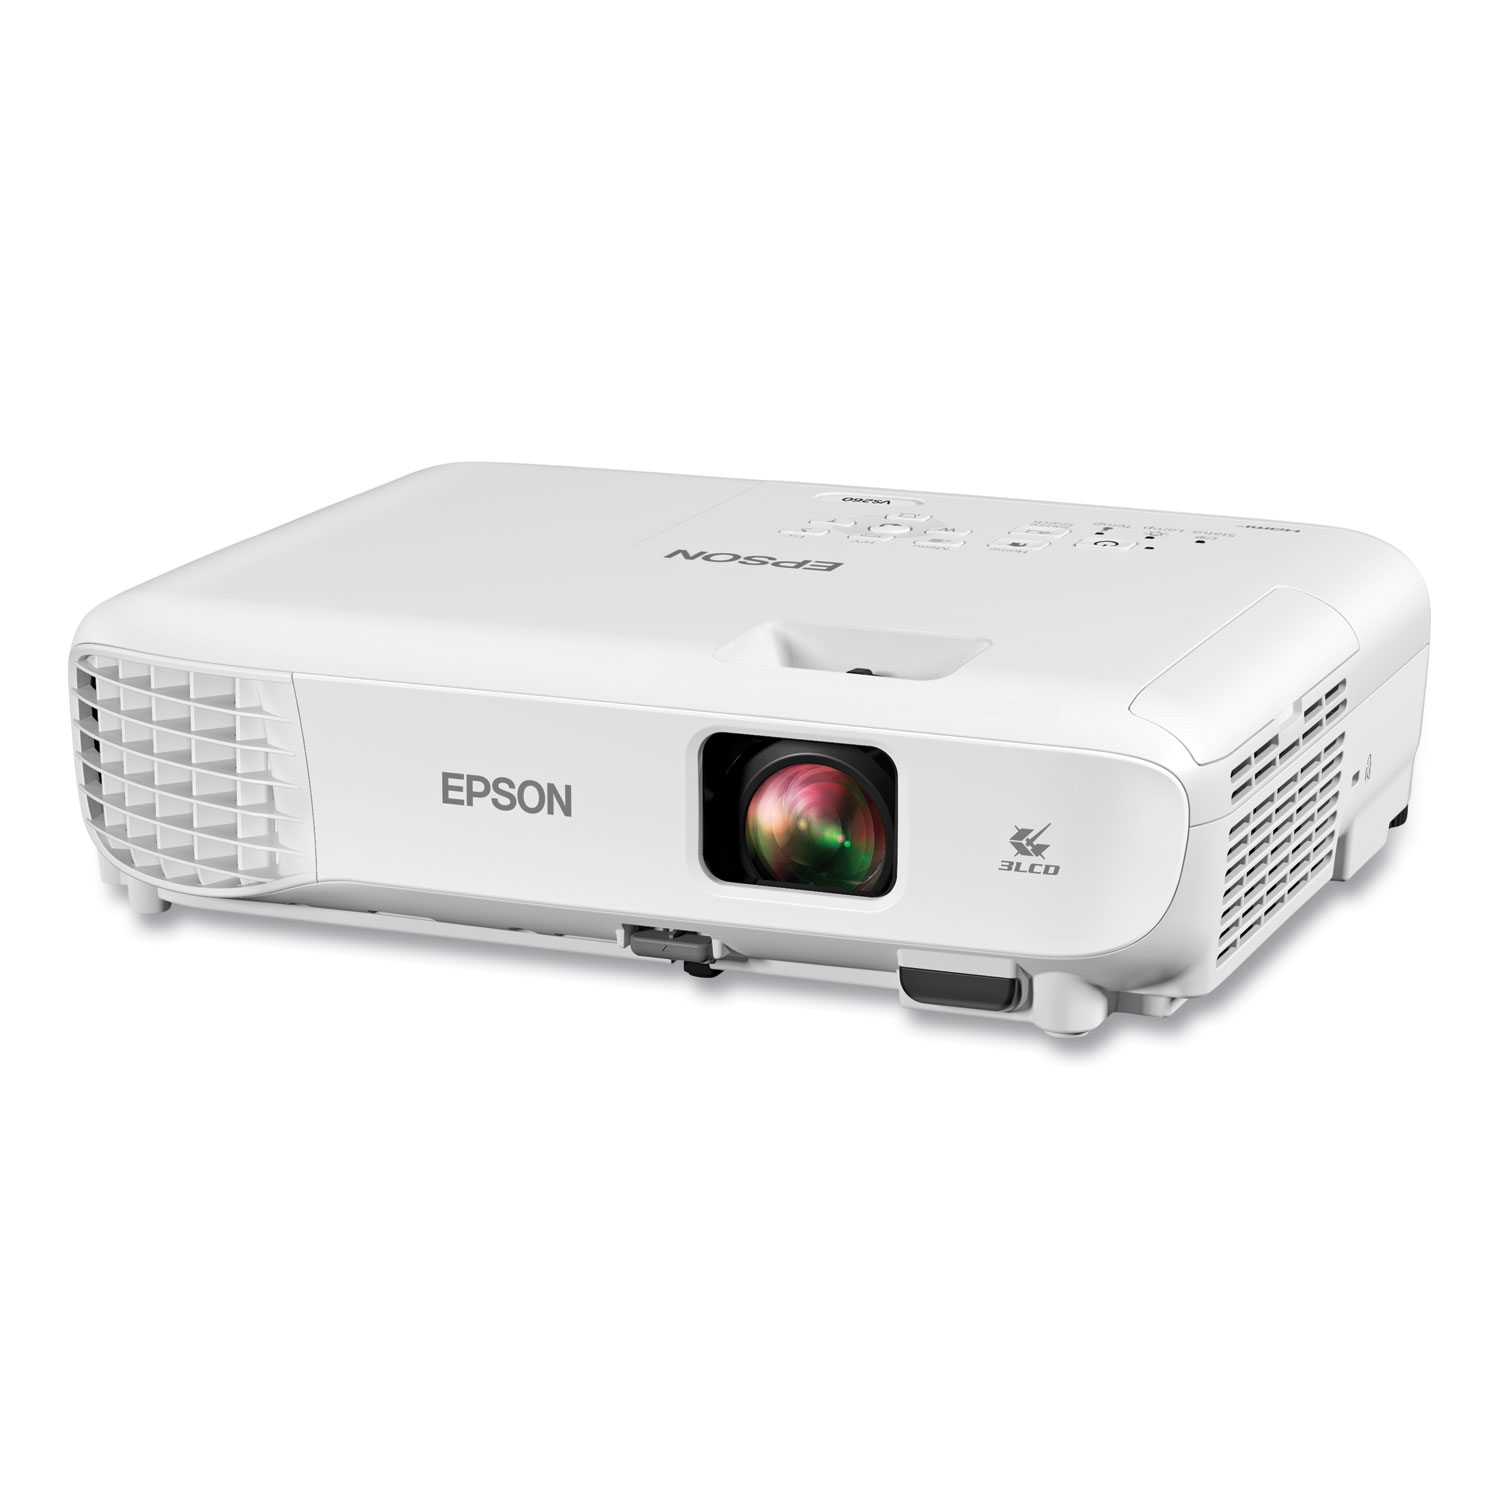 Epson® VS260 XGA 3LCD Projector, 3,300 lm, 1024 x 768 Pixels